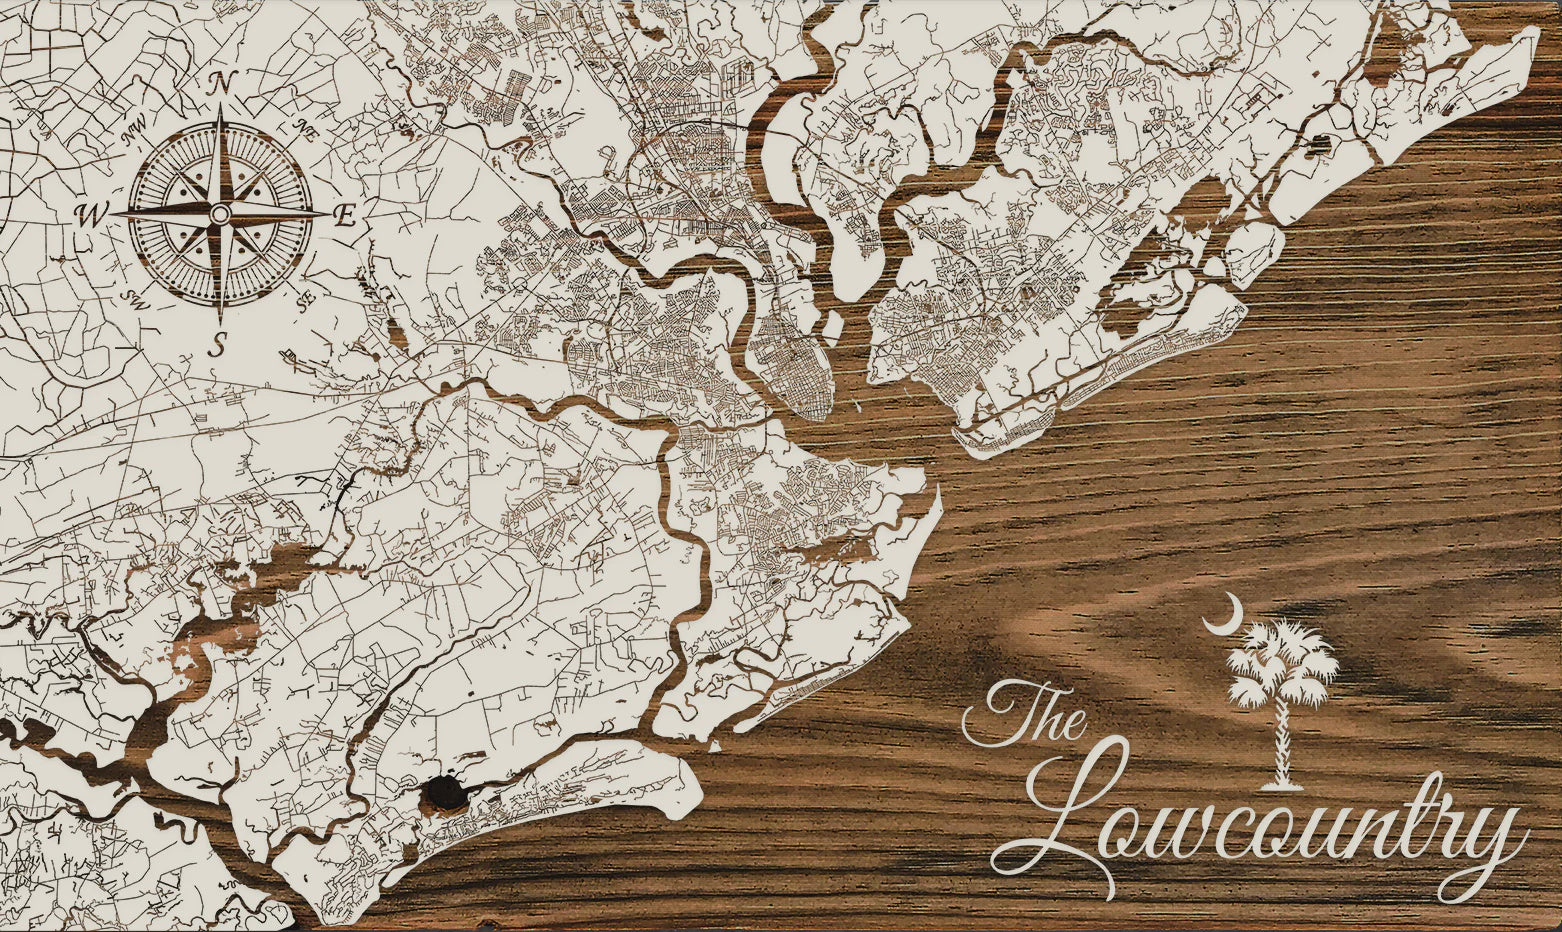 Lowcountry Map - Papier Blanc